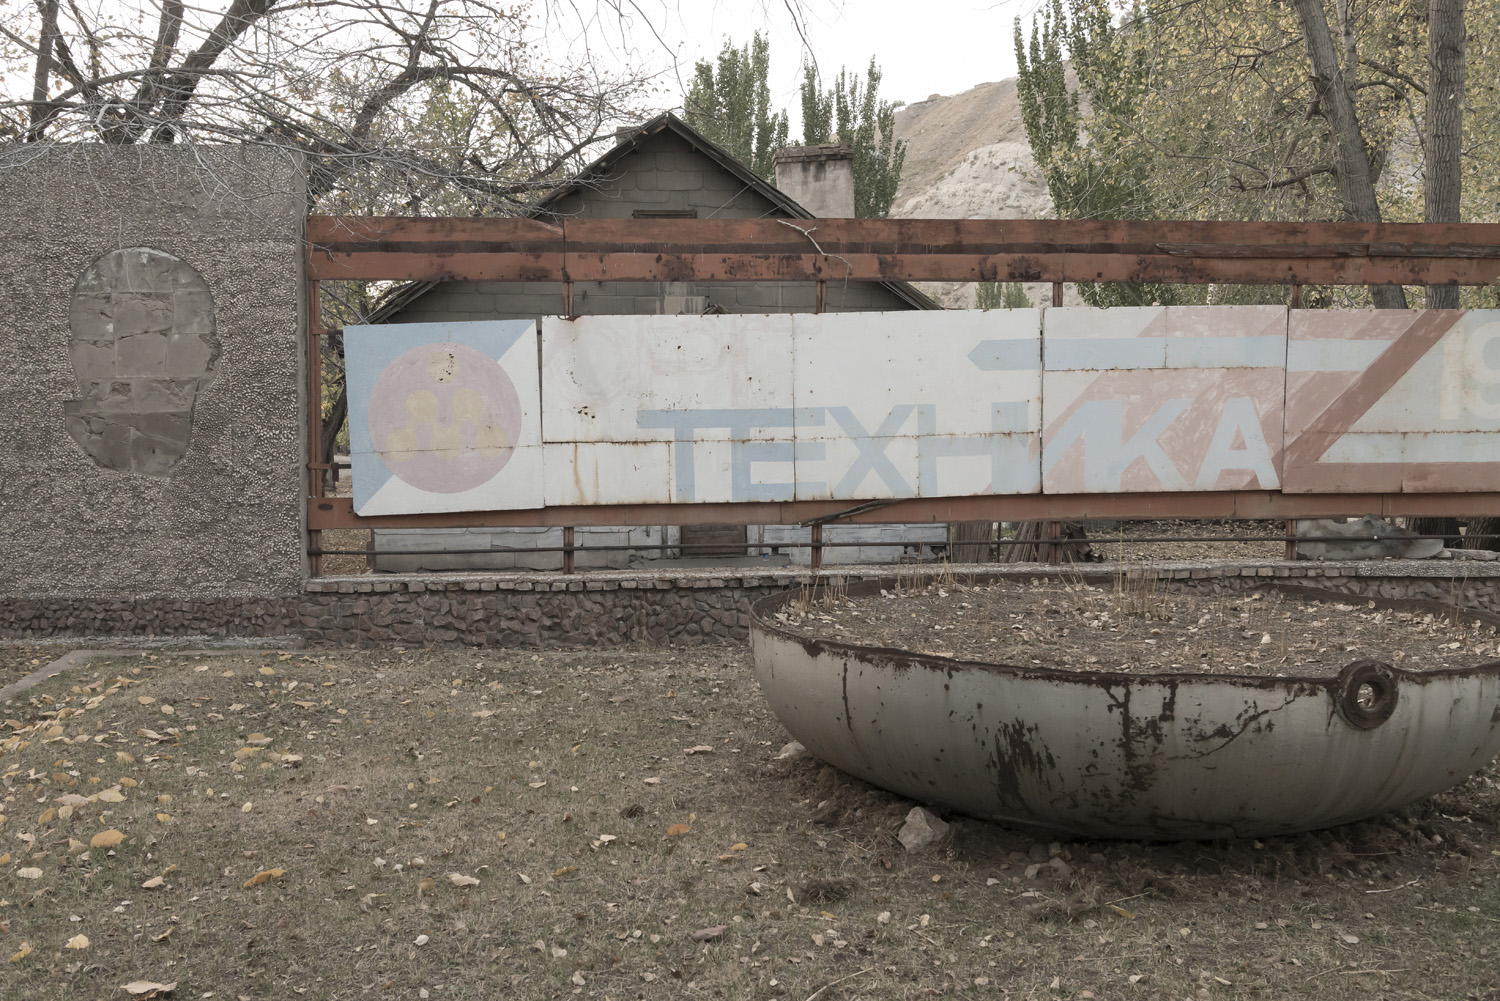 min-kush-soviet-uranium-mining-town-industrial-Russia-Kyrgyzstan-ruins-soviet-sign-jo-kearney-photos-video-photography-pen-factory-sign-soviet.jpg